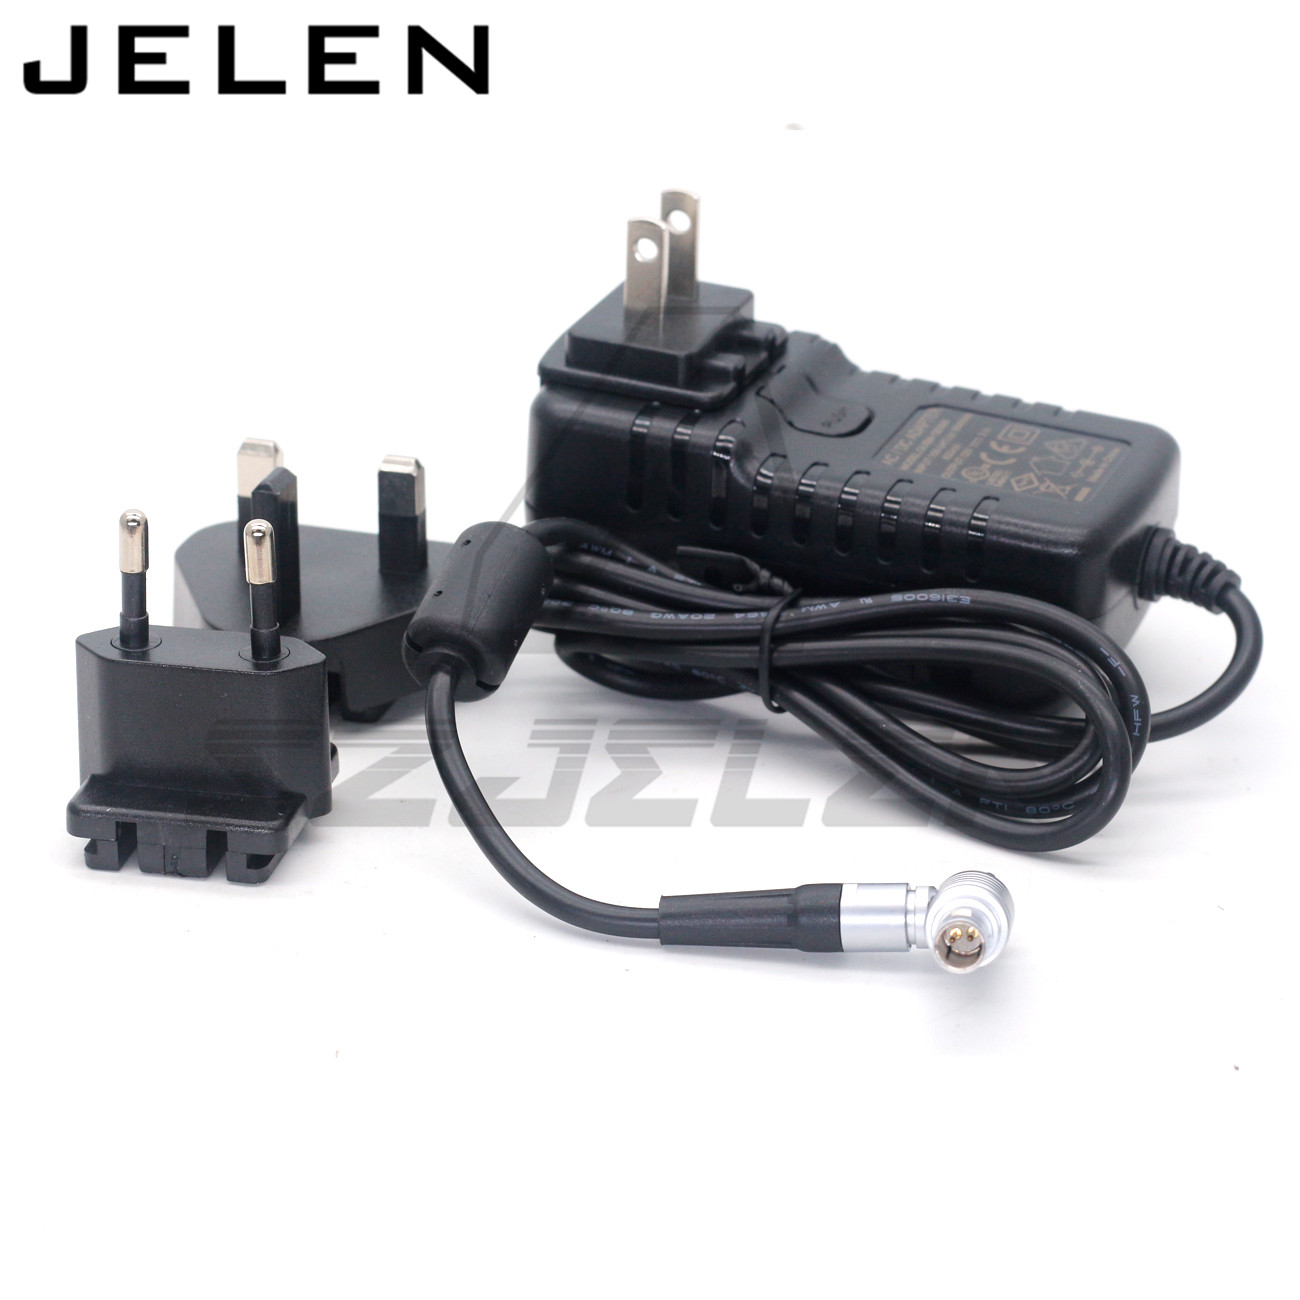 American and European regulations 110-220V adapter to 12V 2-pin elbow Weigu image transmission power cord Teradek-polaishop-1